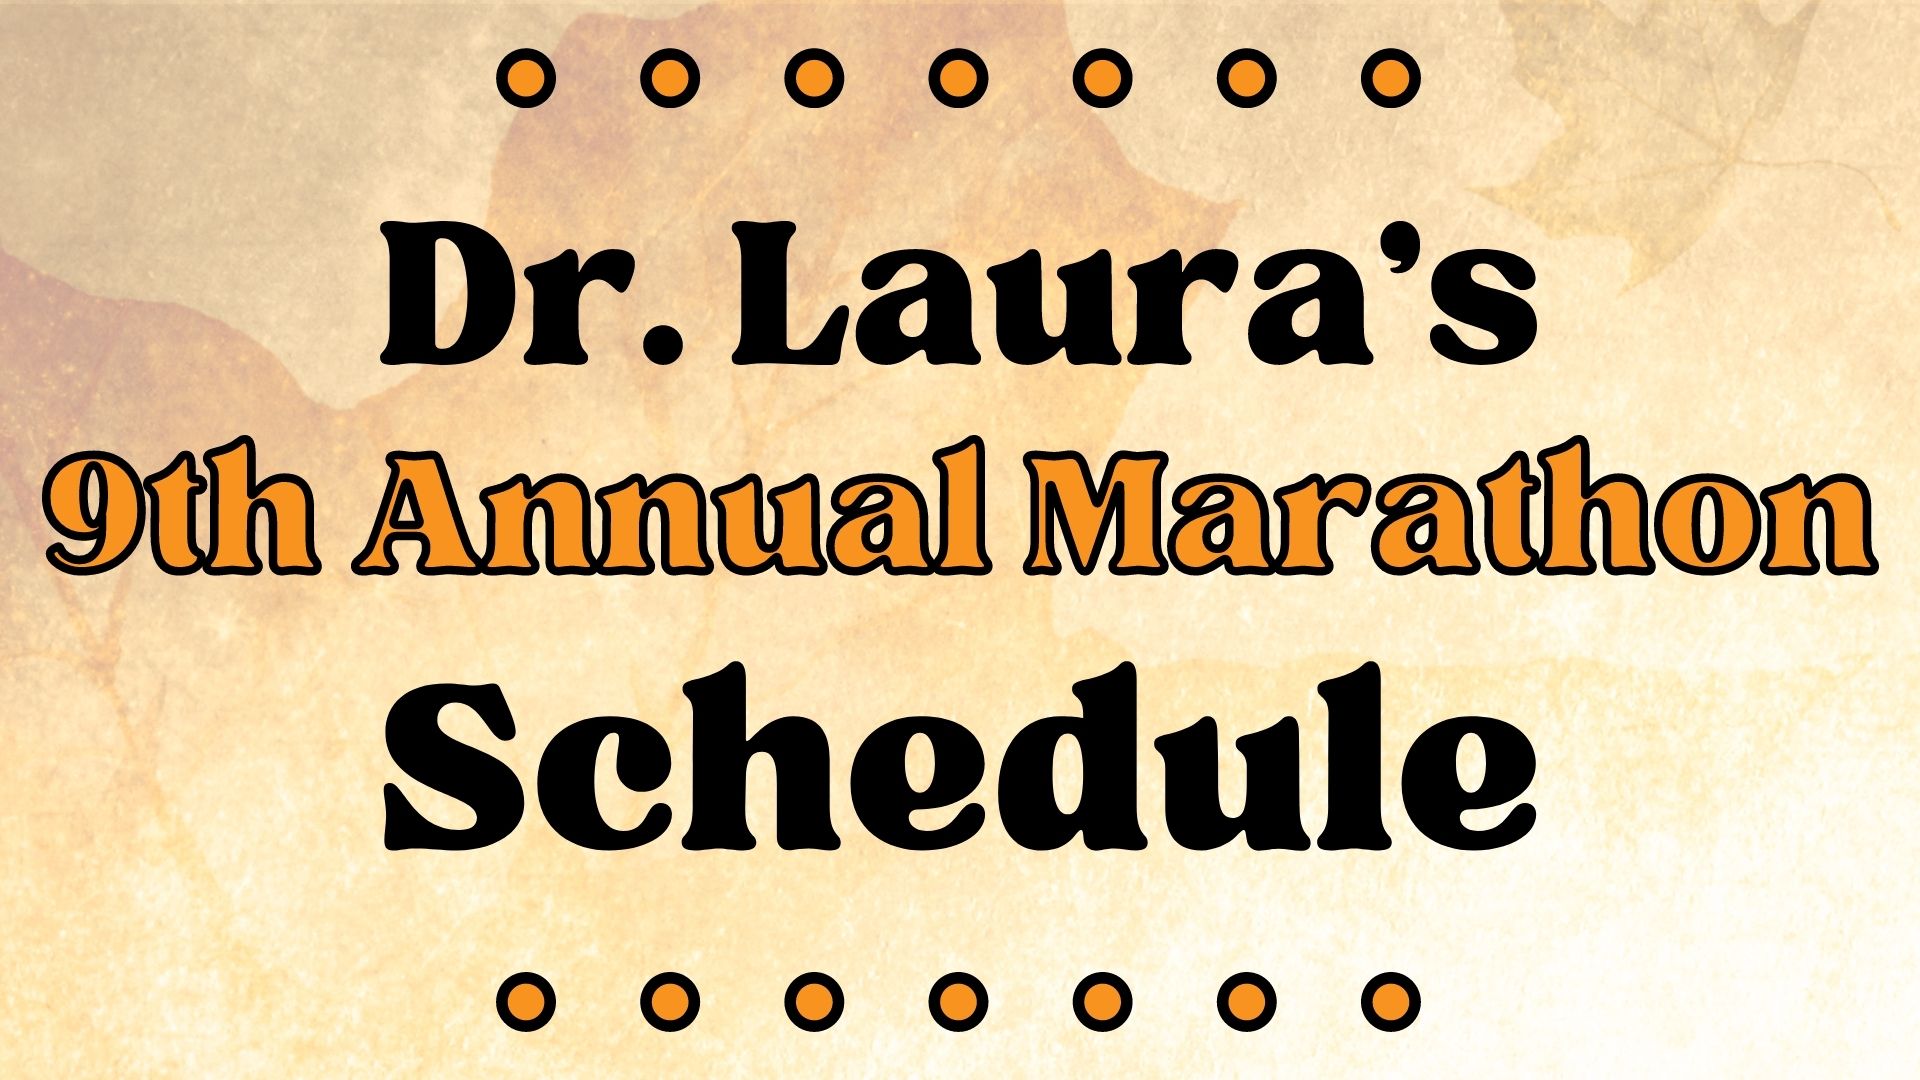 Dr. Laura's 9th Annual Thanksgiving Weekend Marathon Schedule